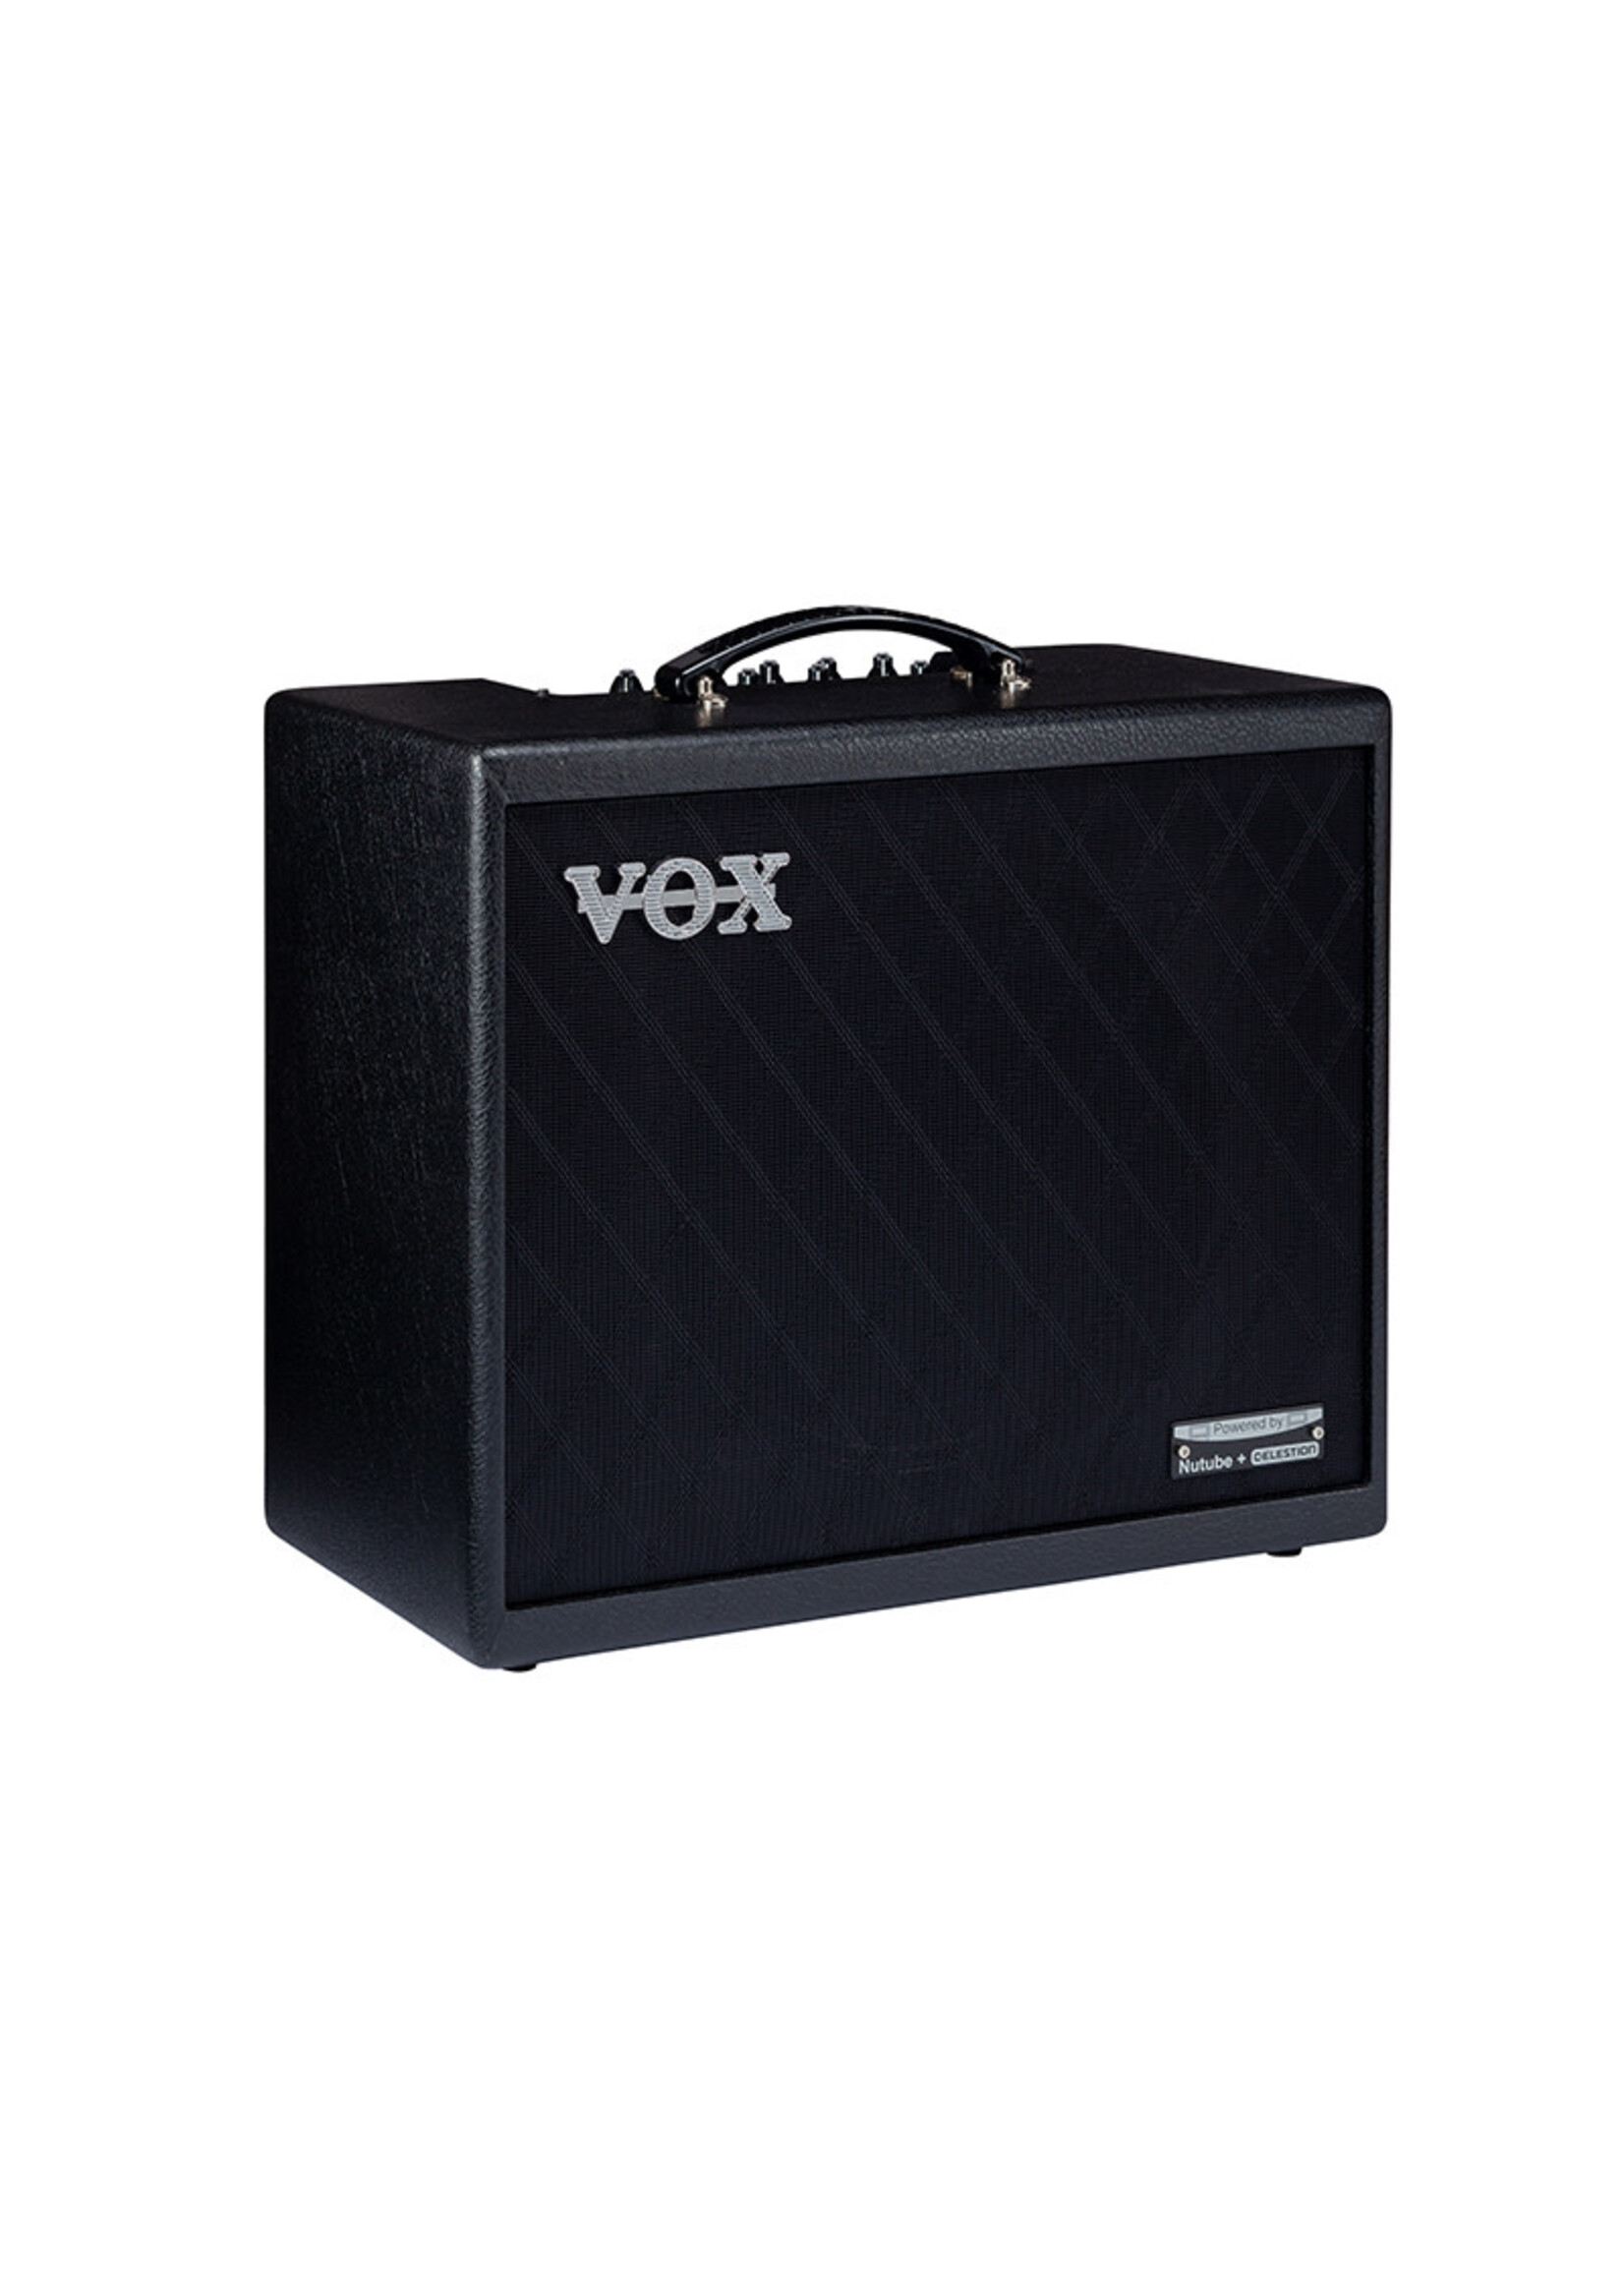 Vox Vox Amplifier Cambridge 50